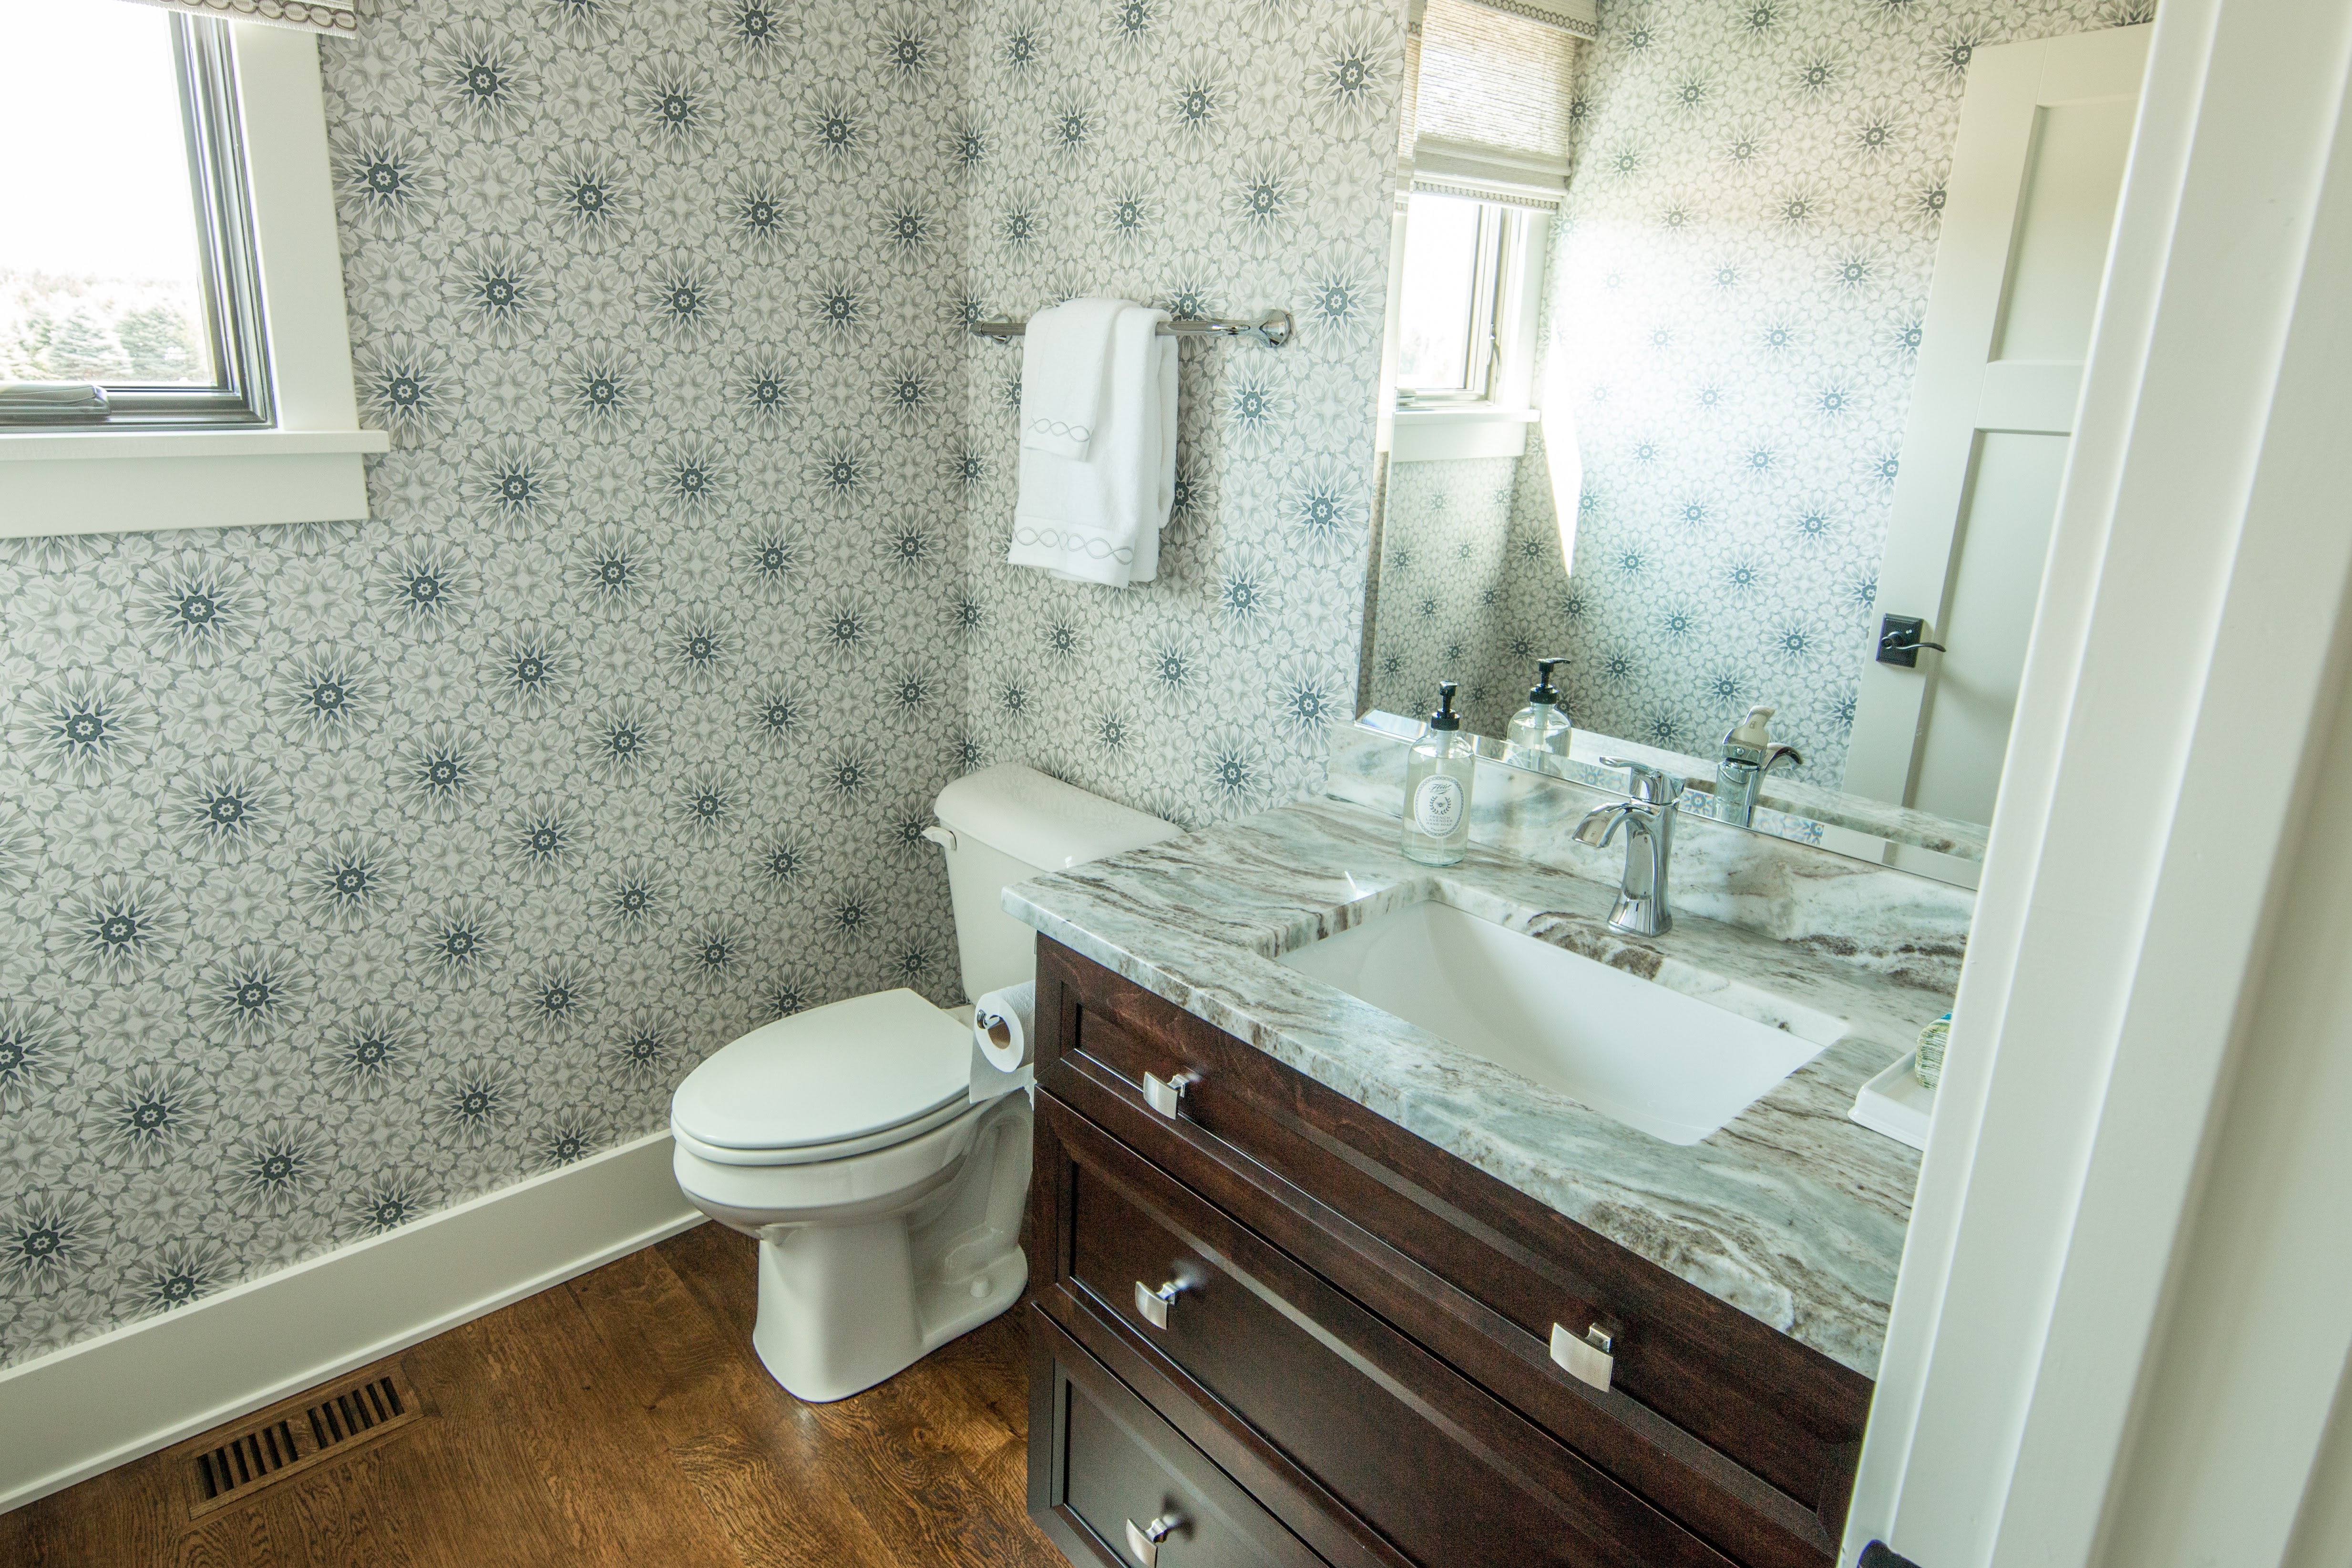 Guest bath with wallpaper, dark vanity and veined quartz counter